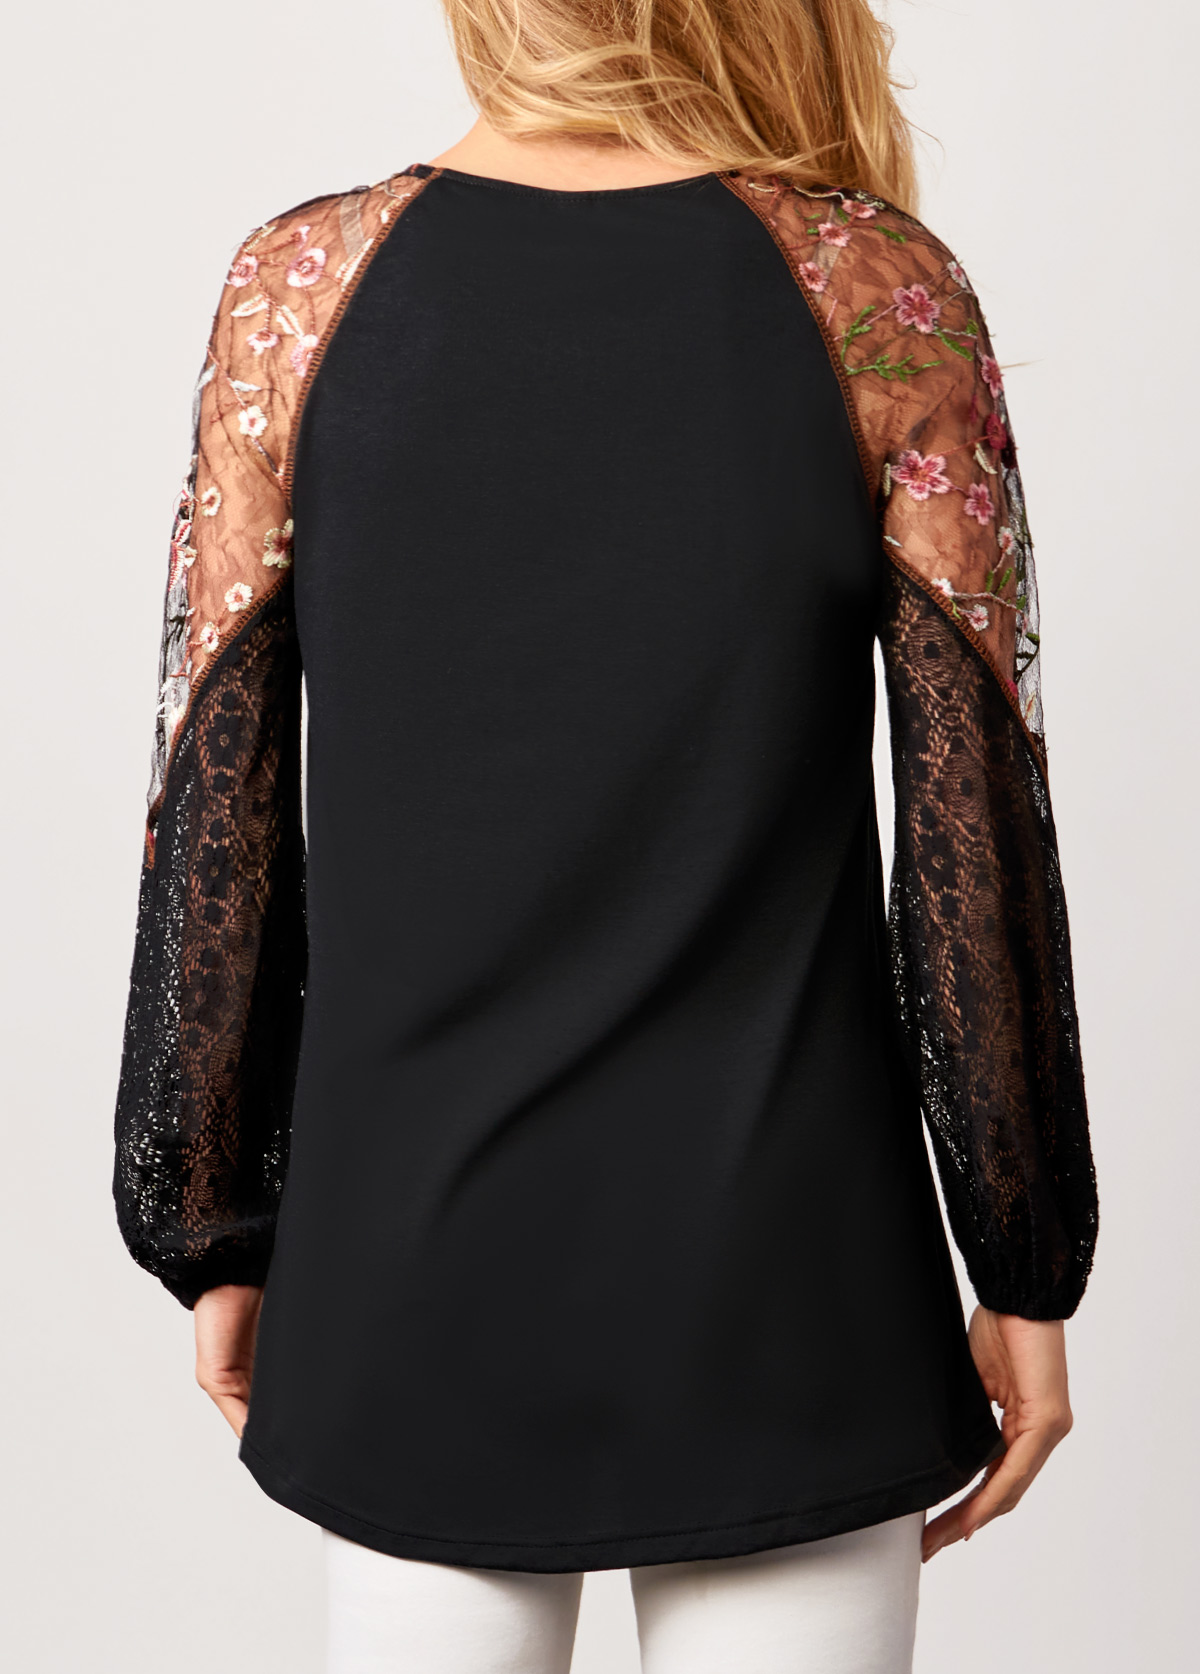 Lace Stitching Black Long Sleeve Blouse